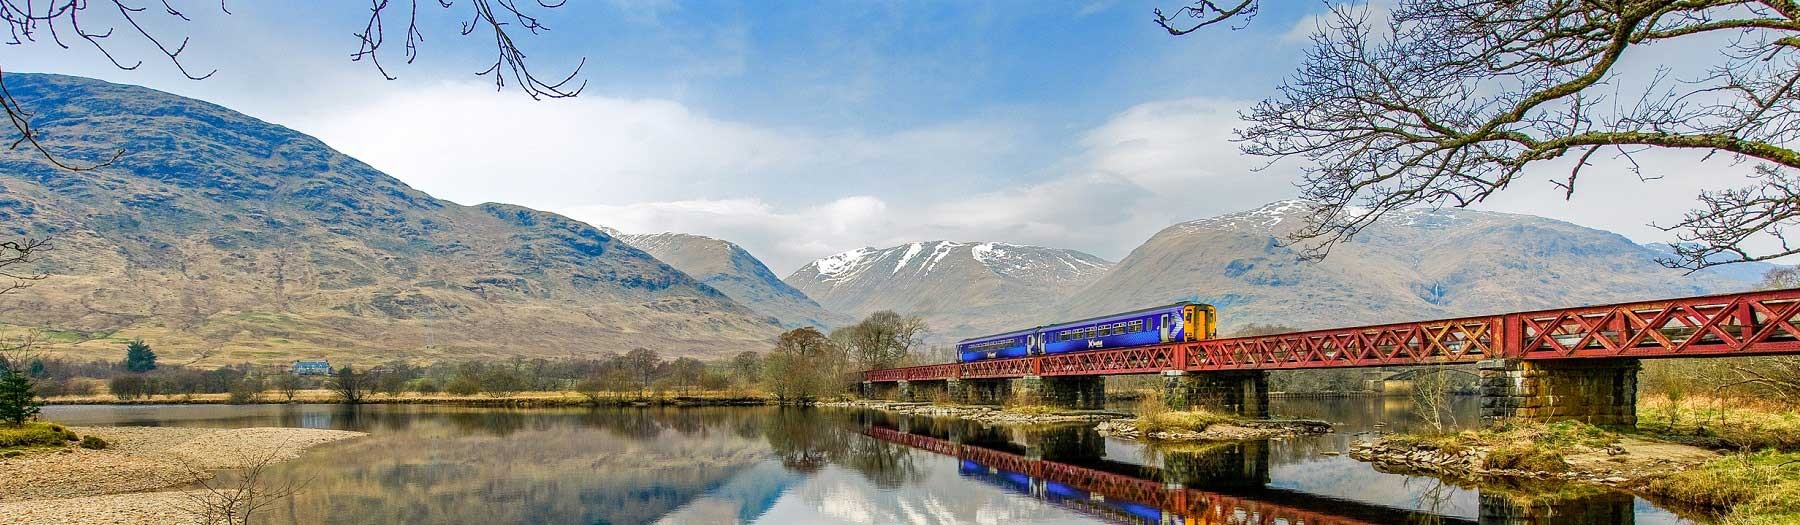 Explore Scotland and save using a railcard